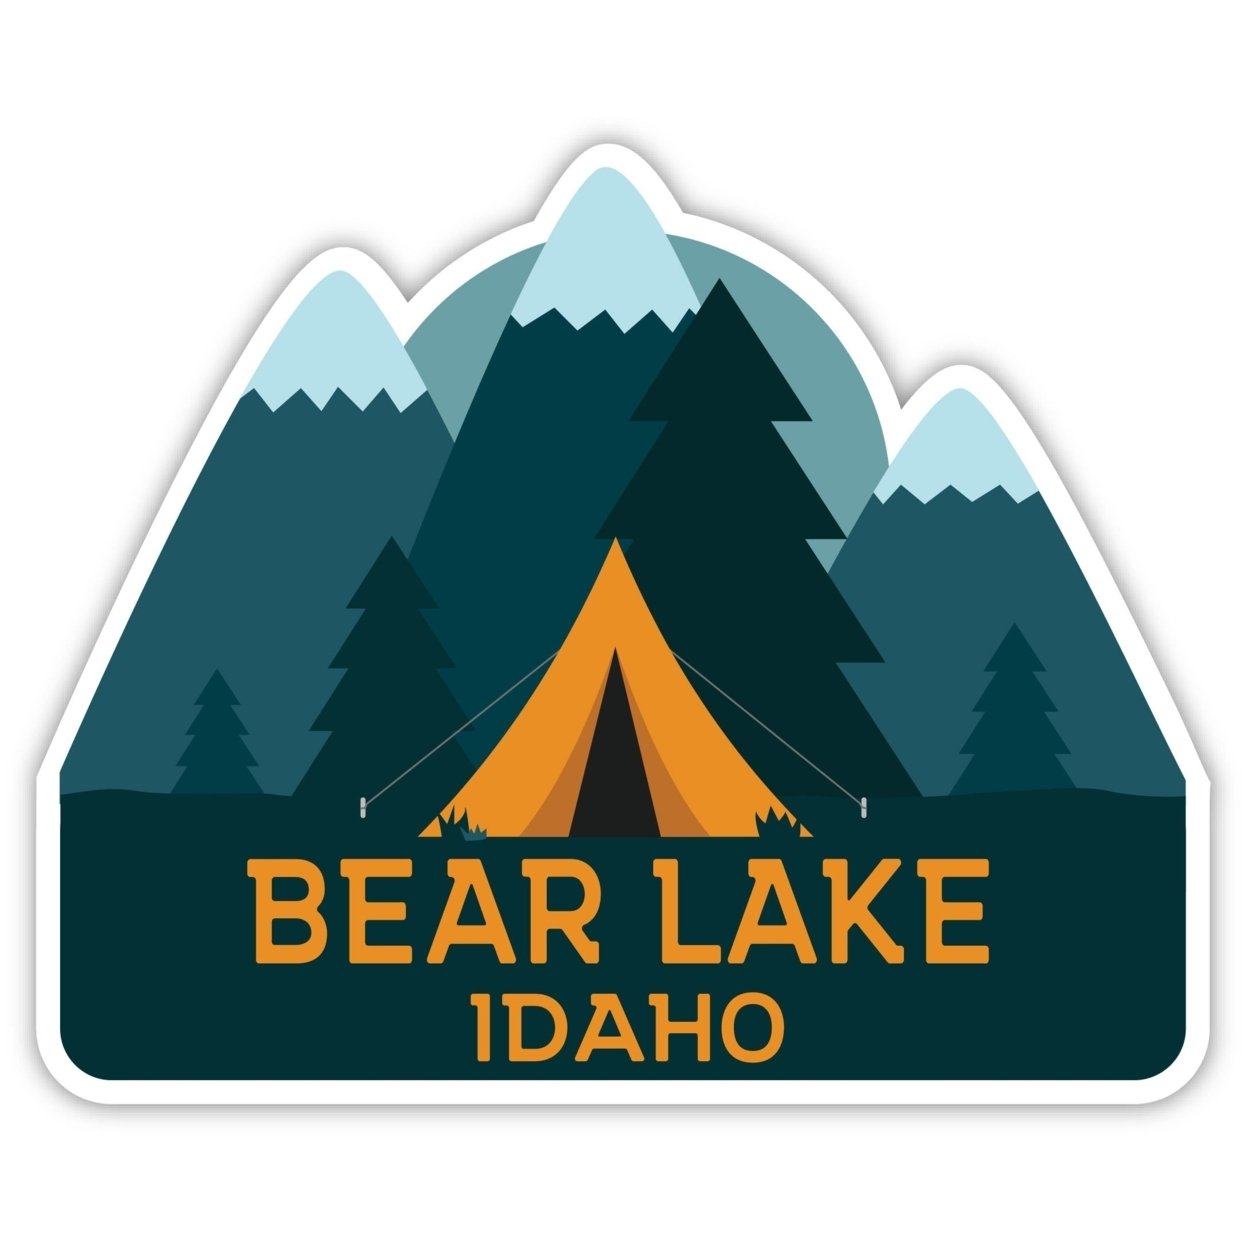 Bear Lake Idaho Souvenir Decorative Stickers (Choose Theme And Size) - 4-Pack, 8-Inch, Adventures Awaits